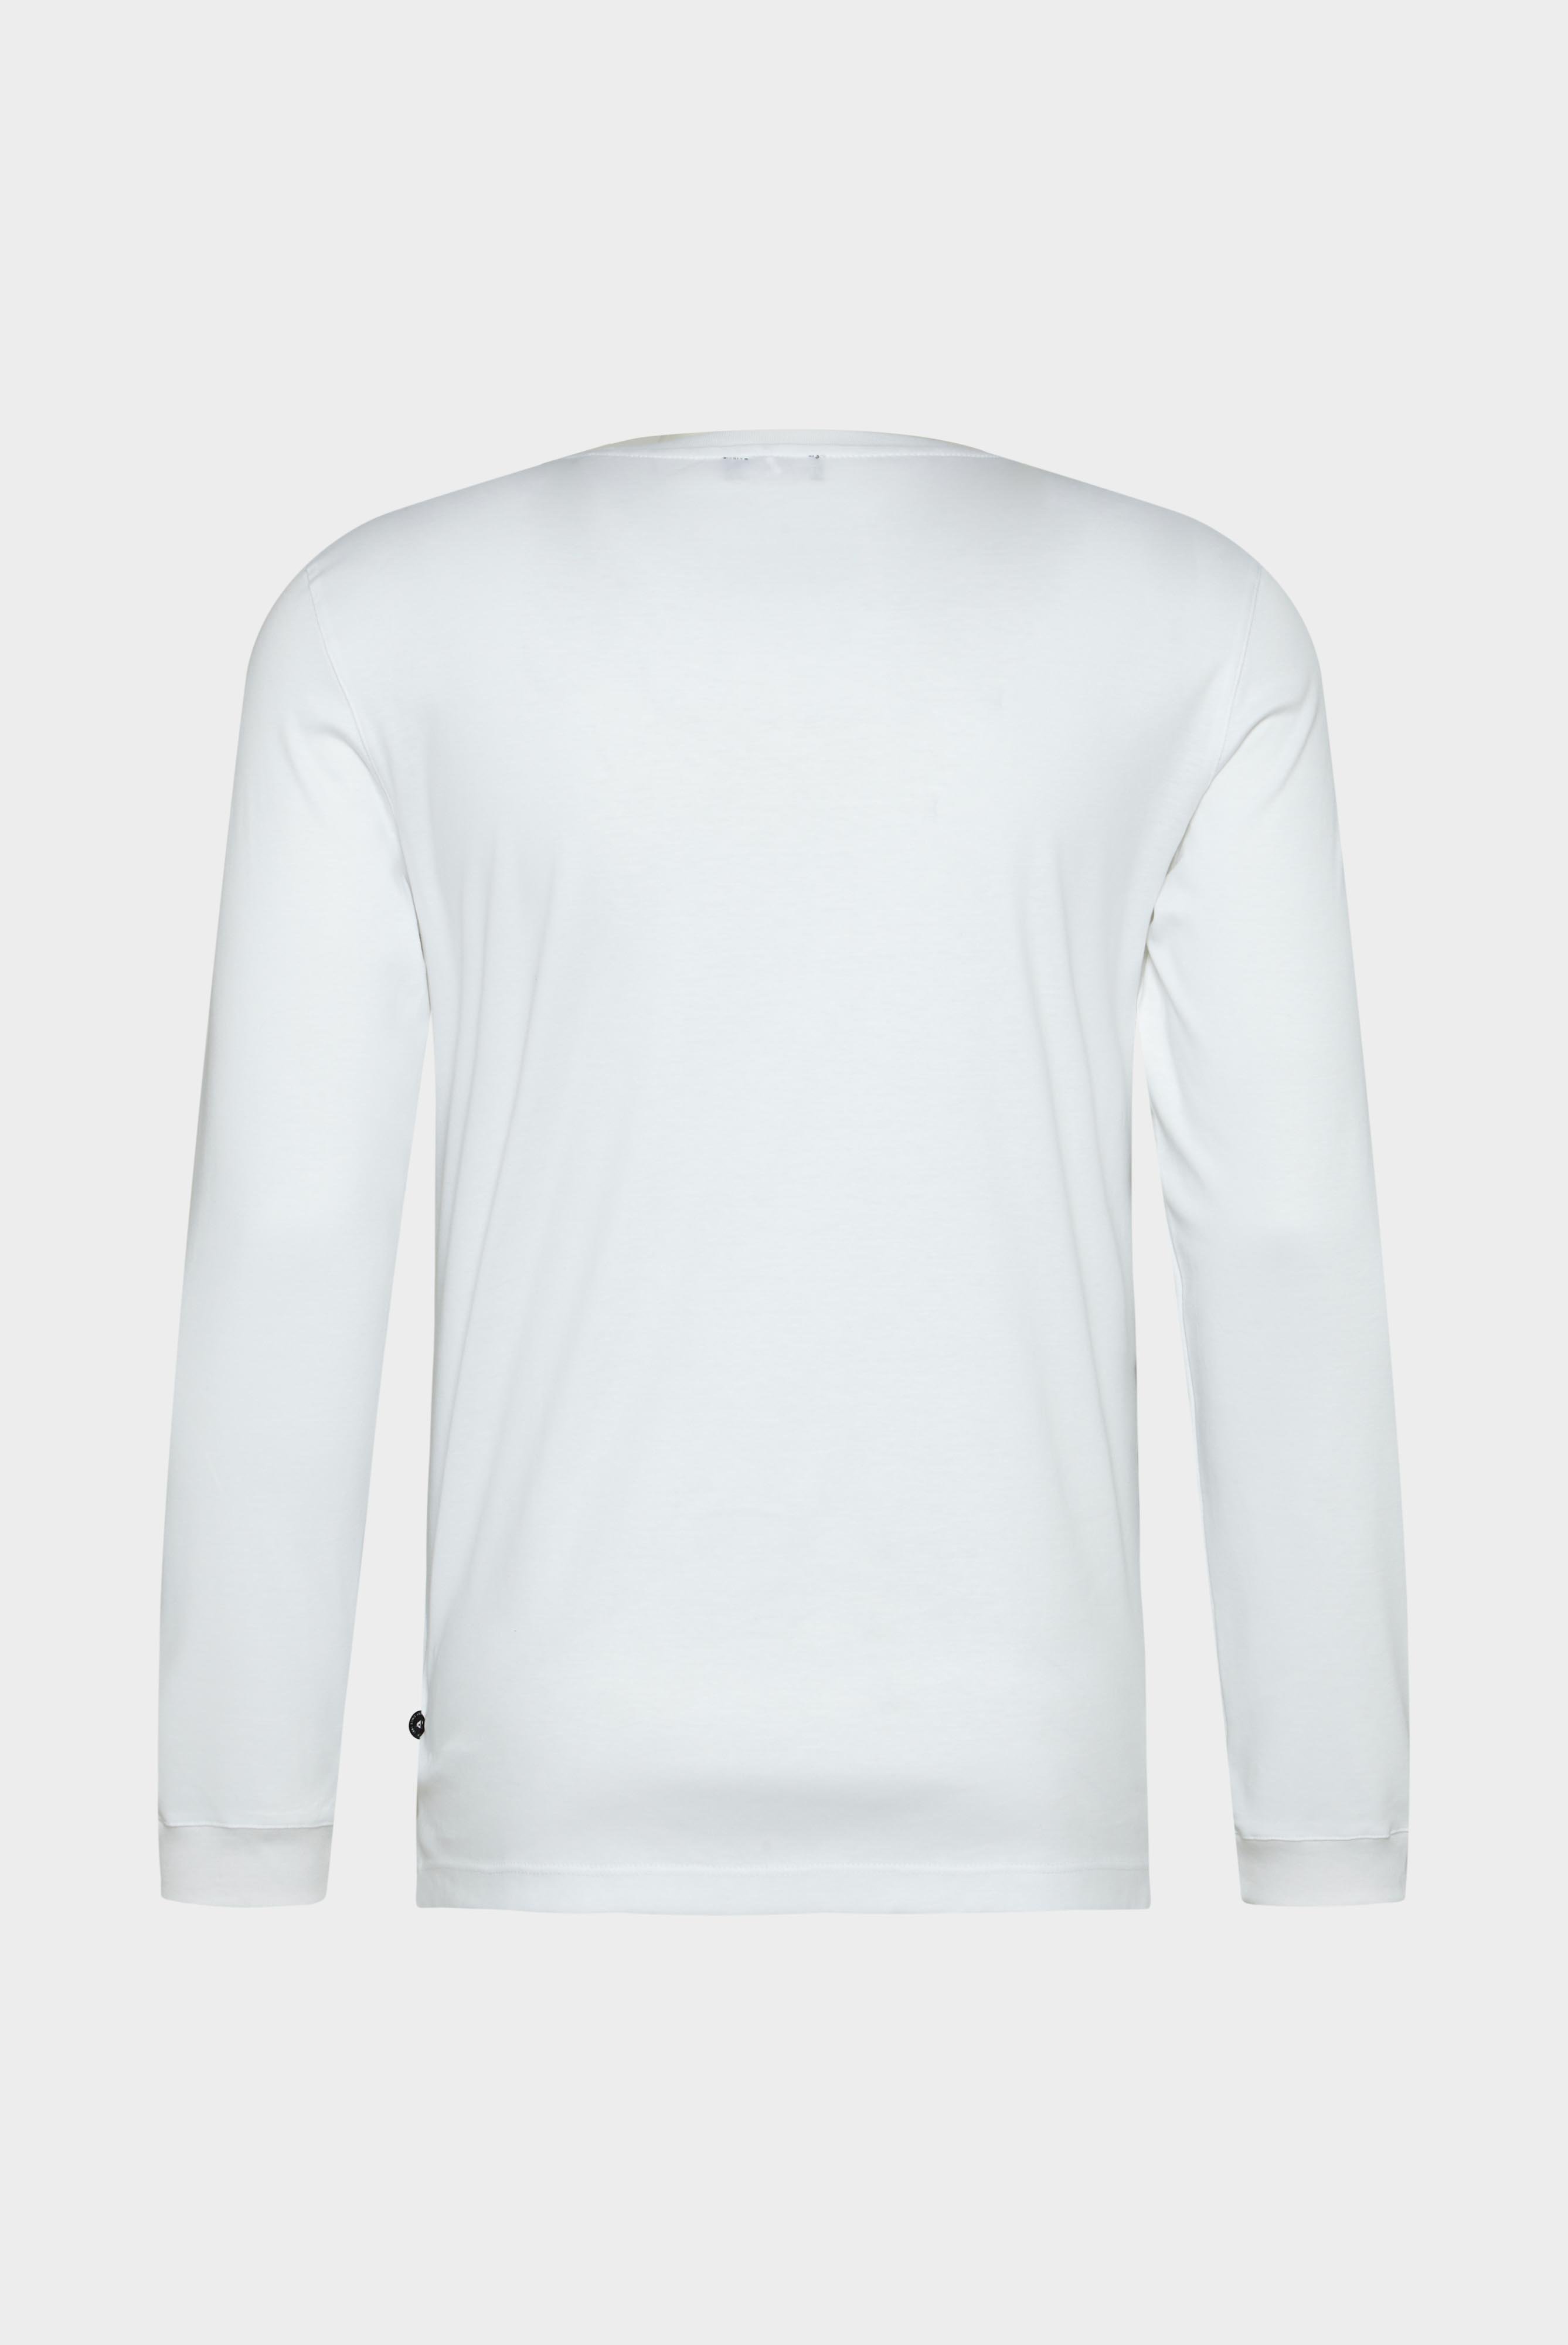 T-Shirts+Longsleeve Swiss Cotton Jersey Crew Neck T-Shirt+20.1718.UX.180031.000.X3L